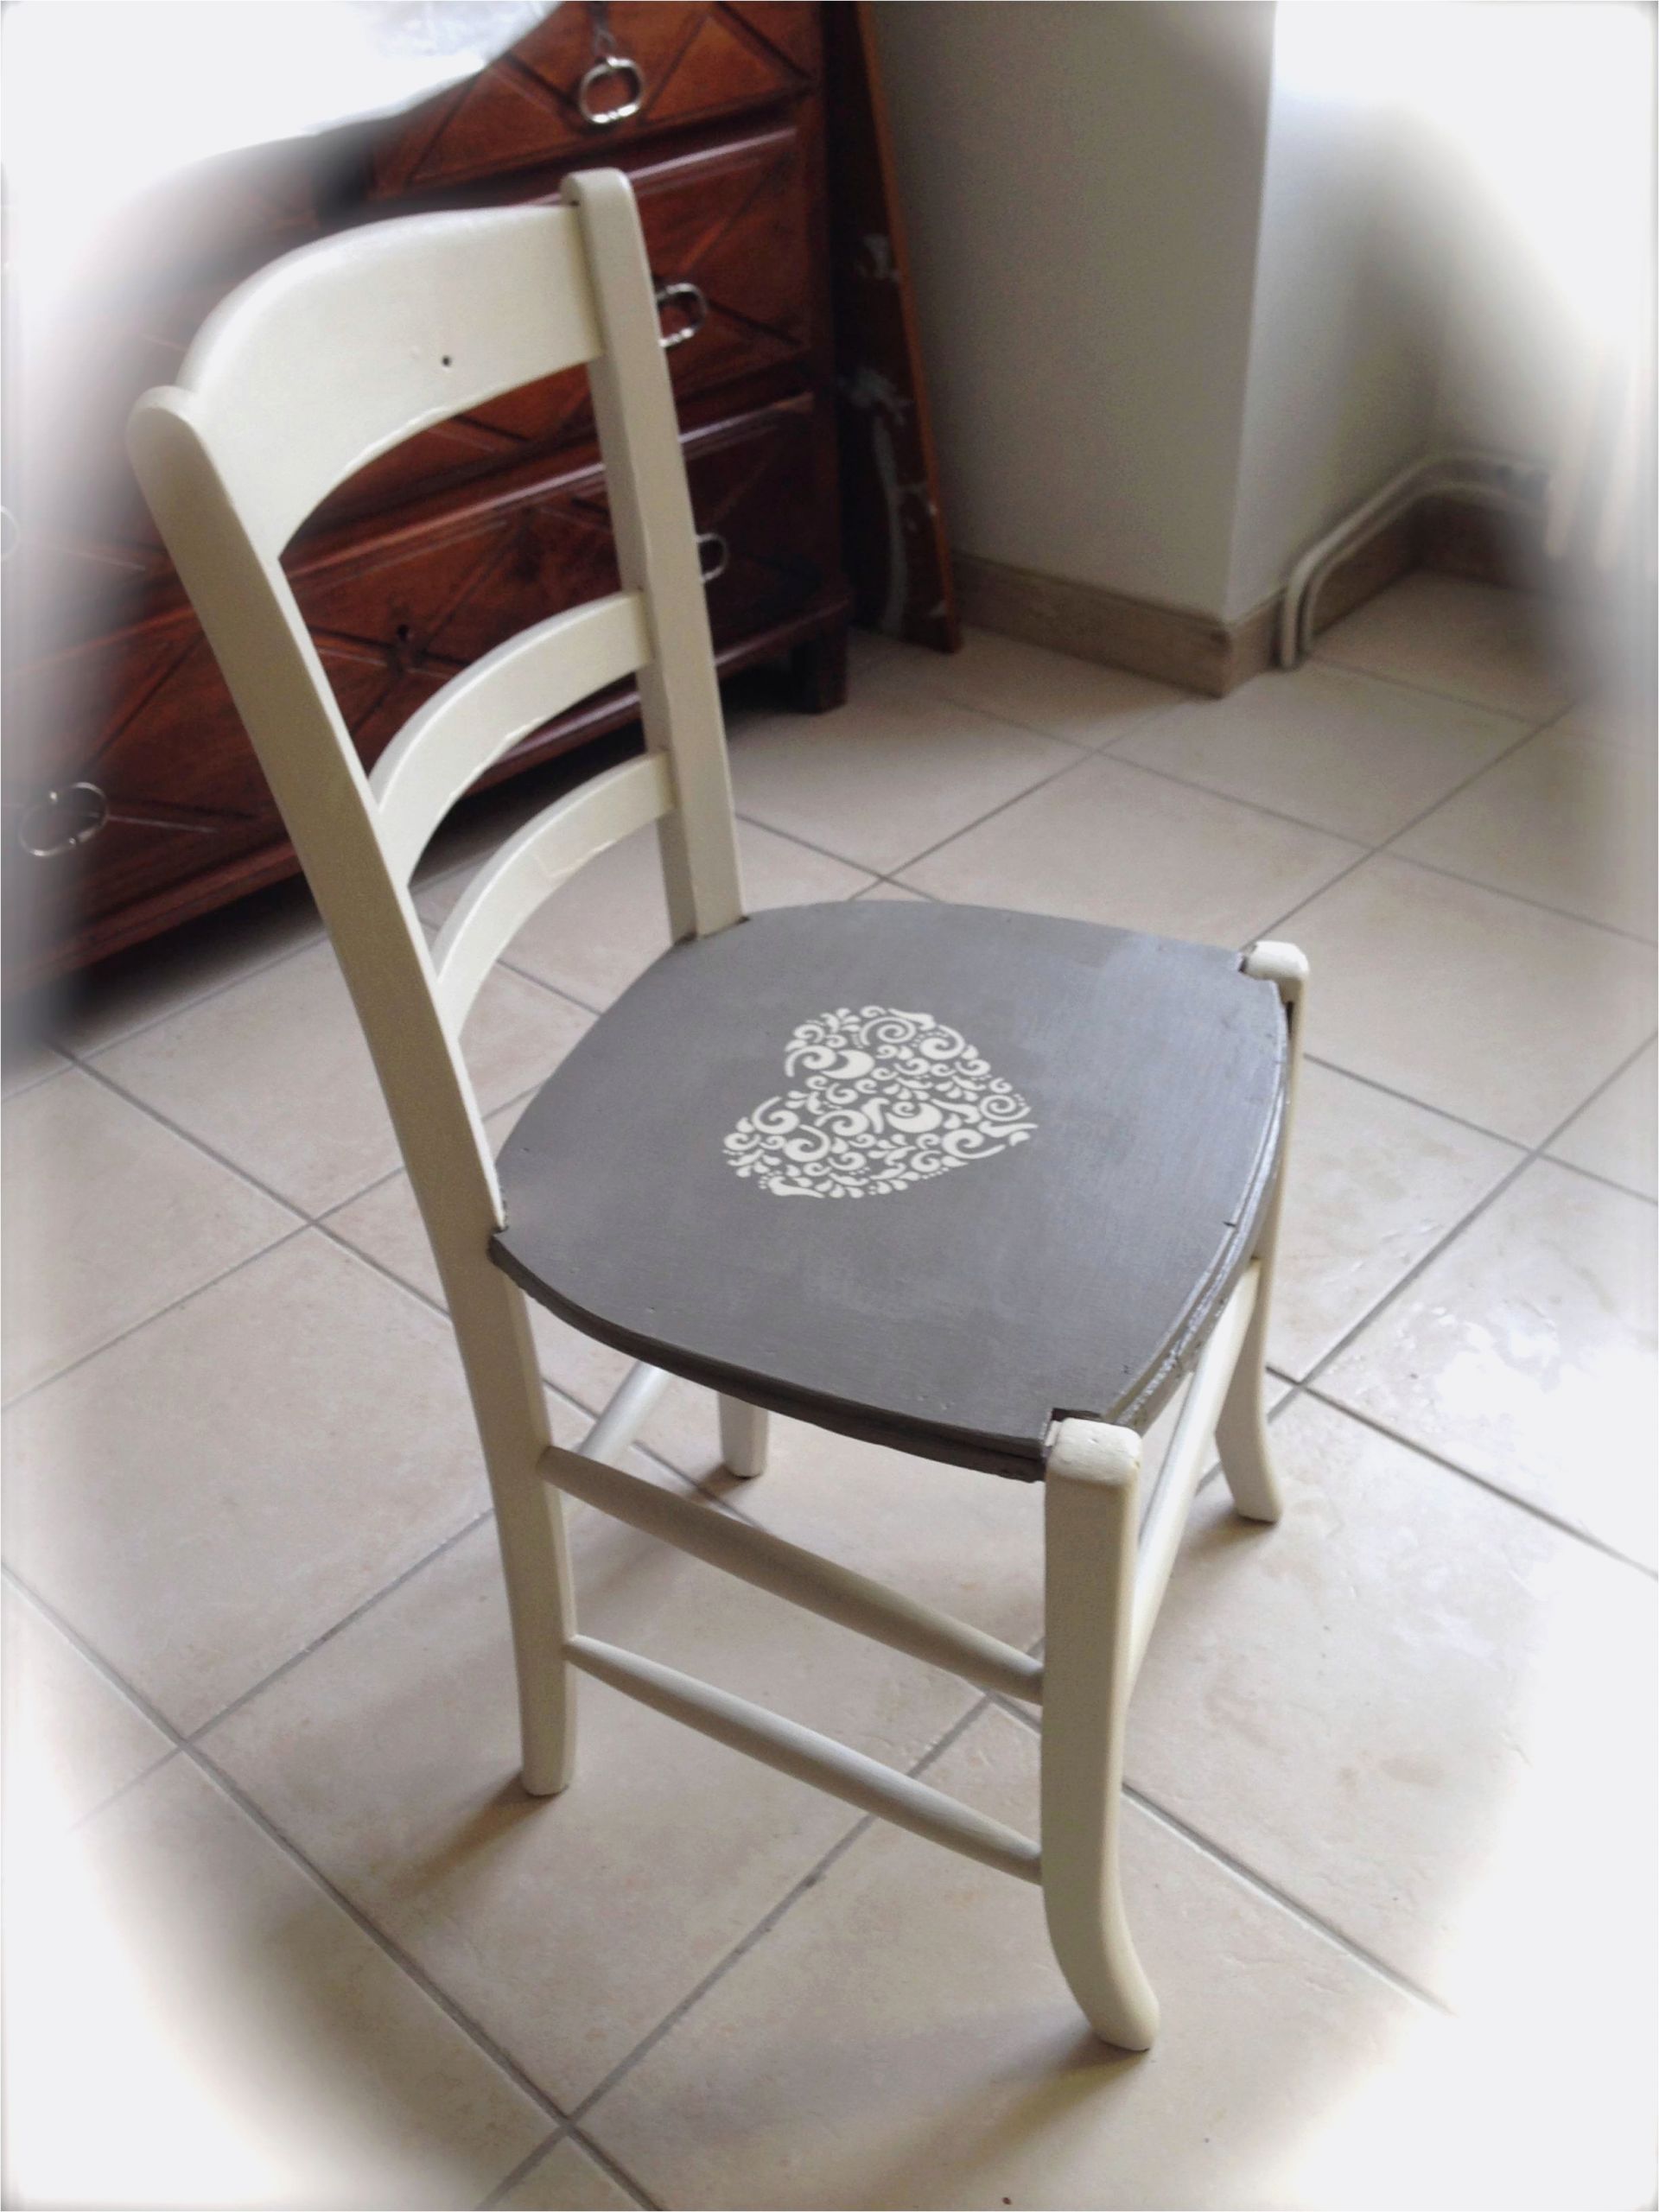 chaise bois moderne impressionnant chaise en bois moderne inspirant admire chaise bois et blanc of chaise bois moderne